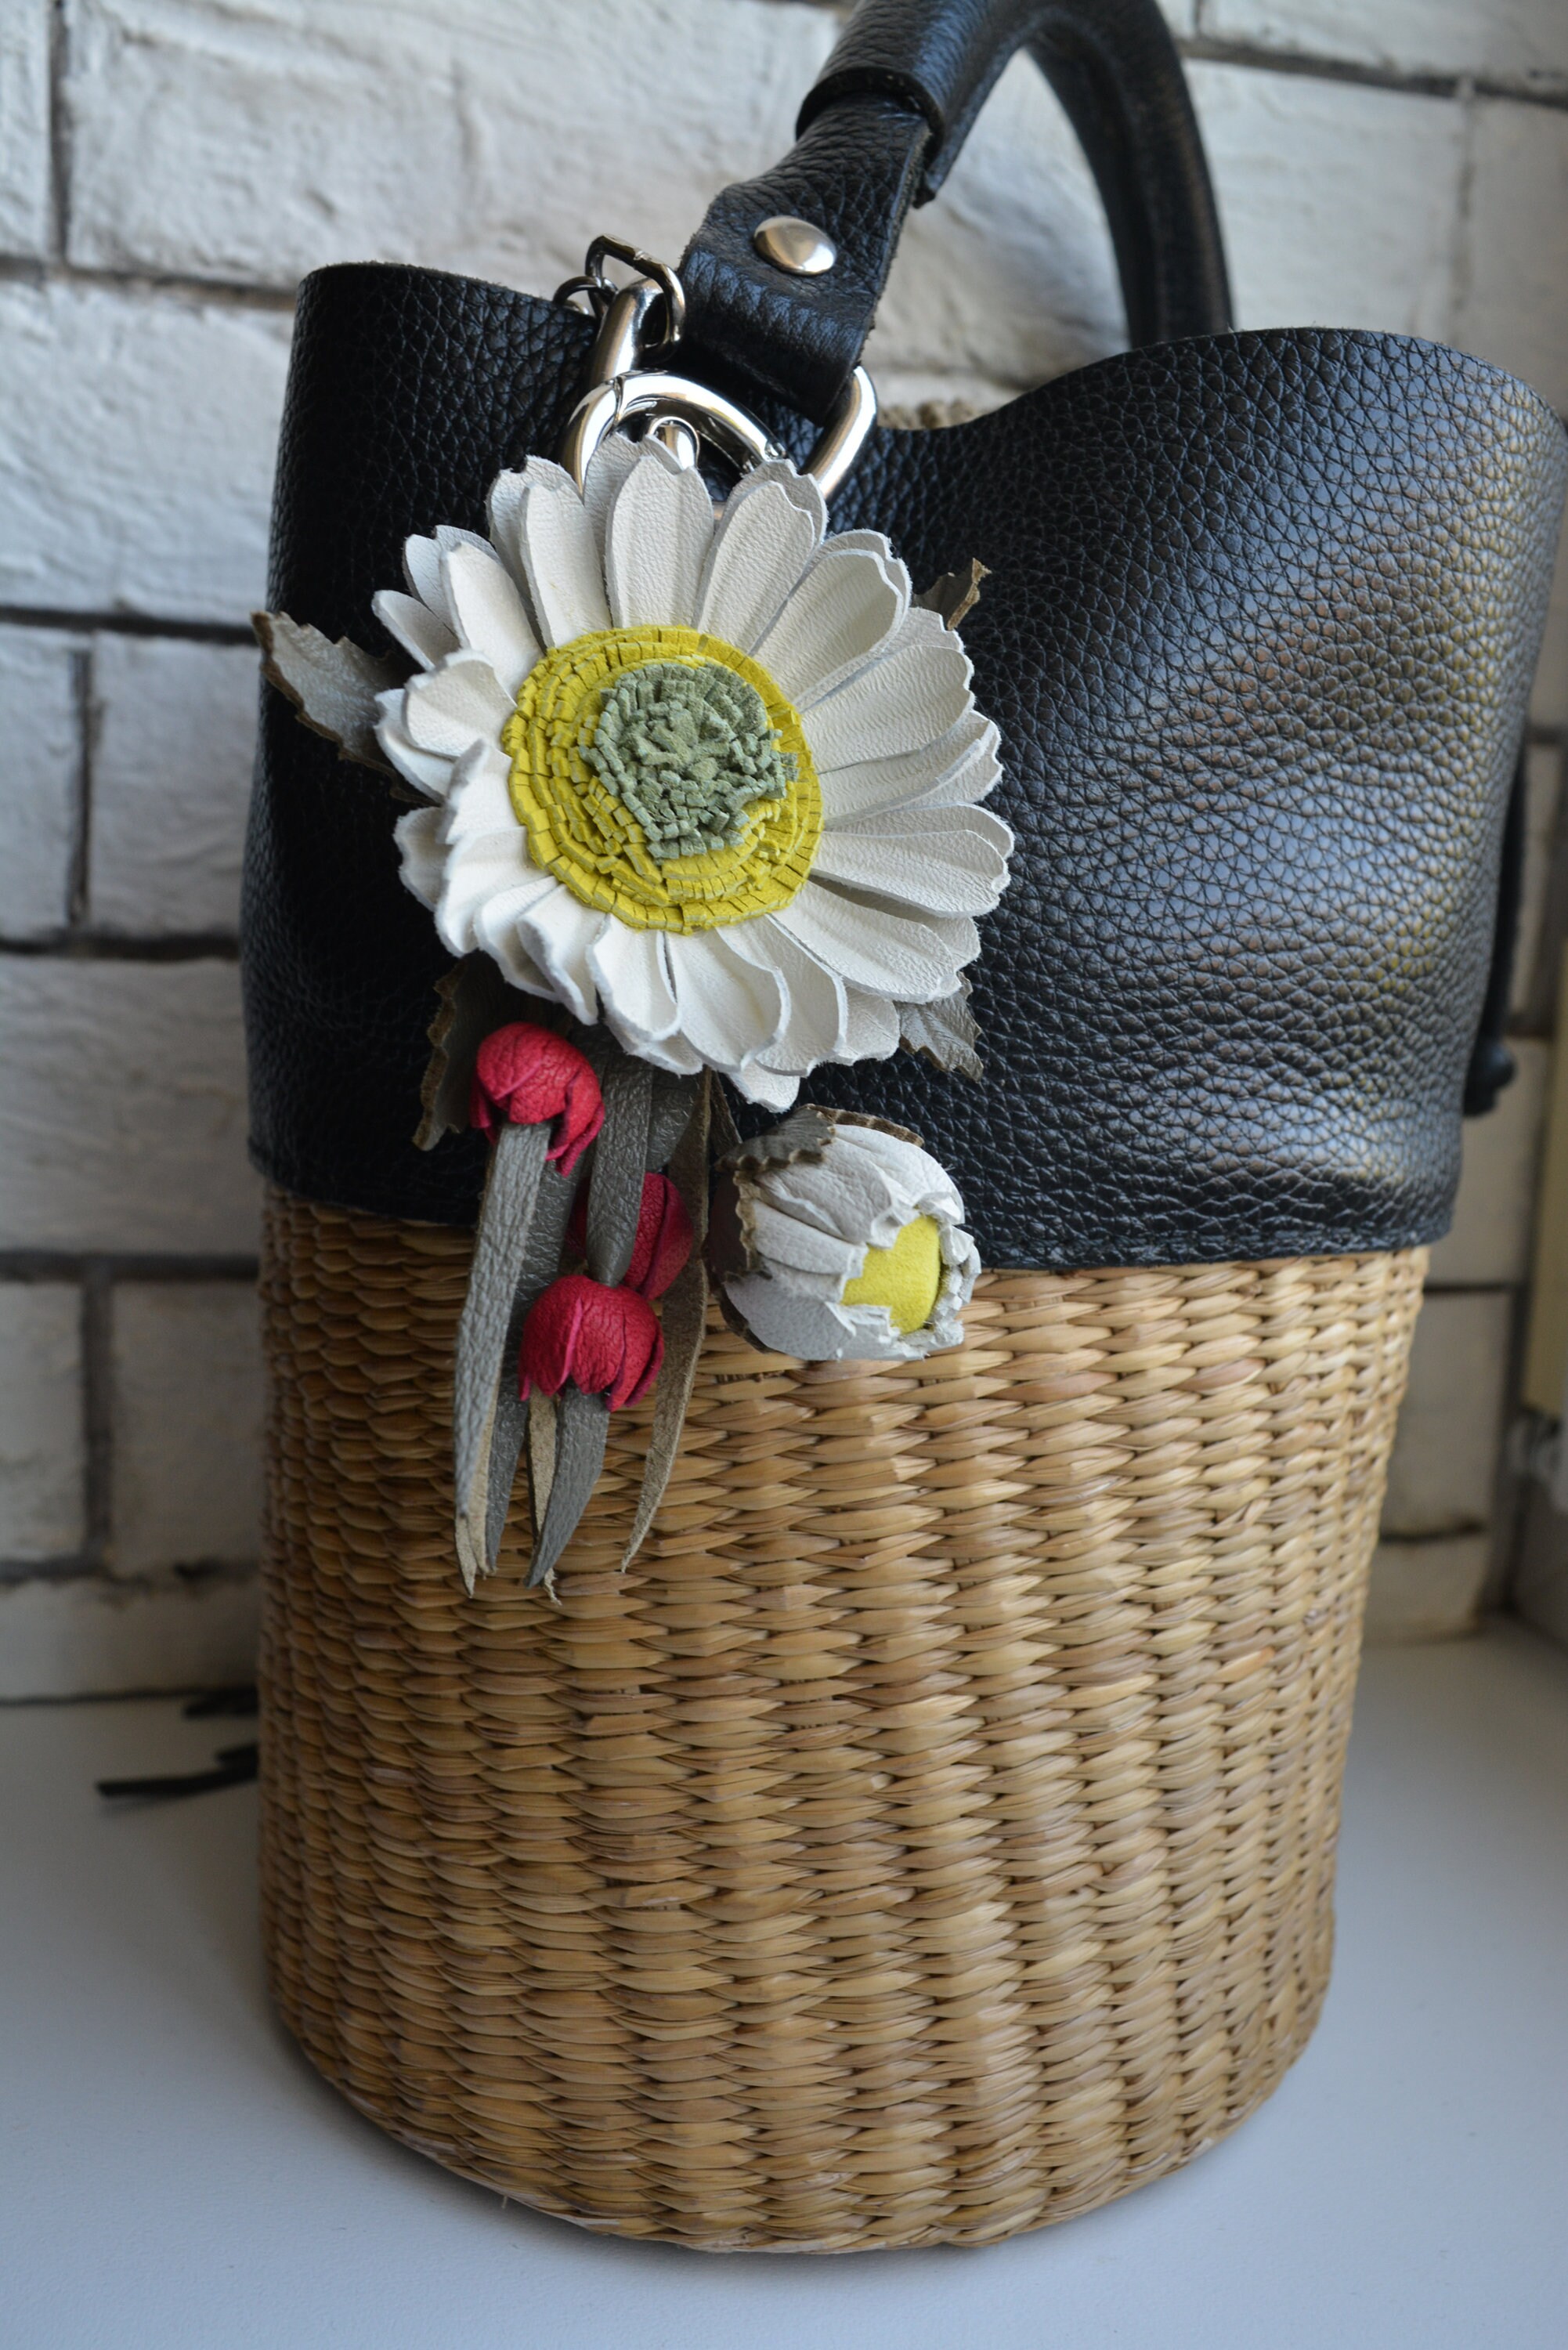 Genuine Leather Flower Bag Charm Daisy and pink bellsHandbag | Etsy